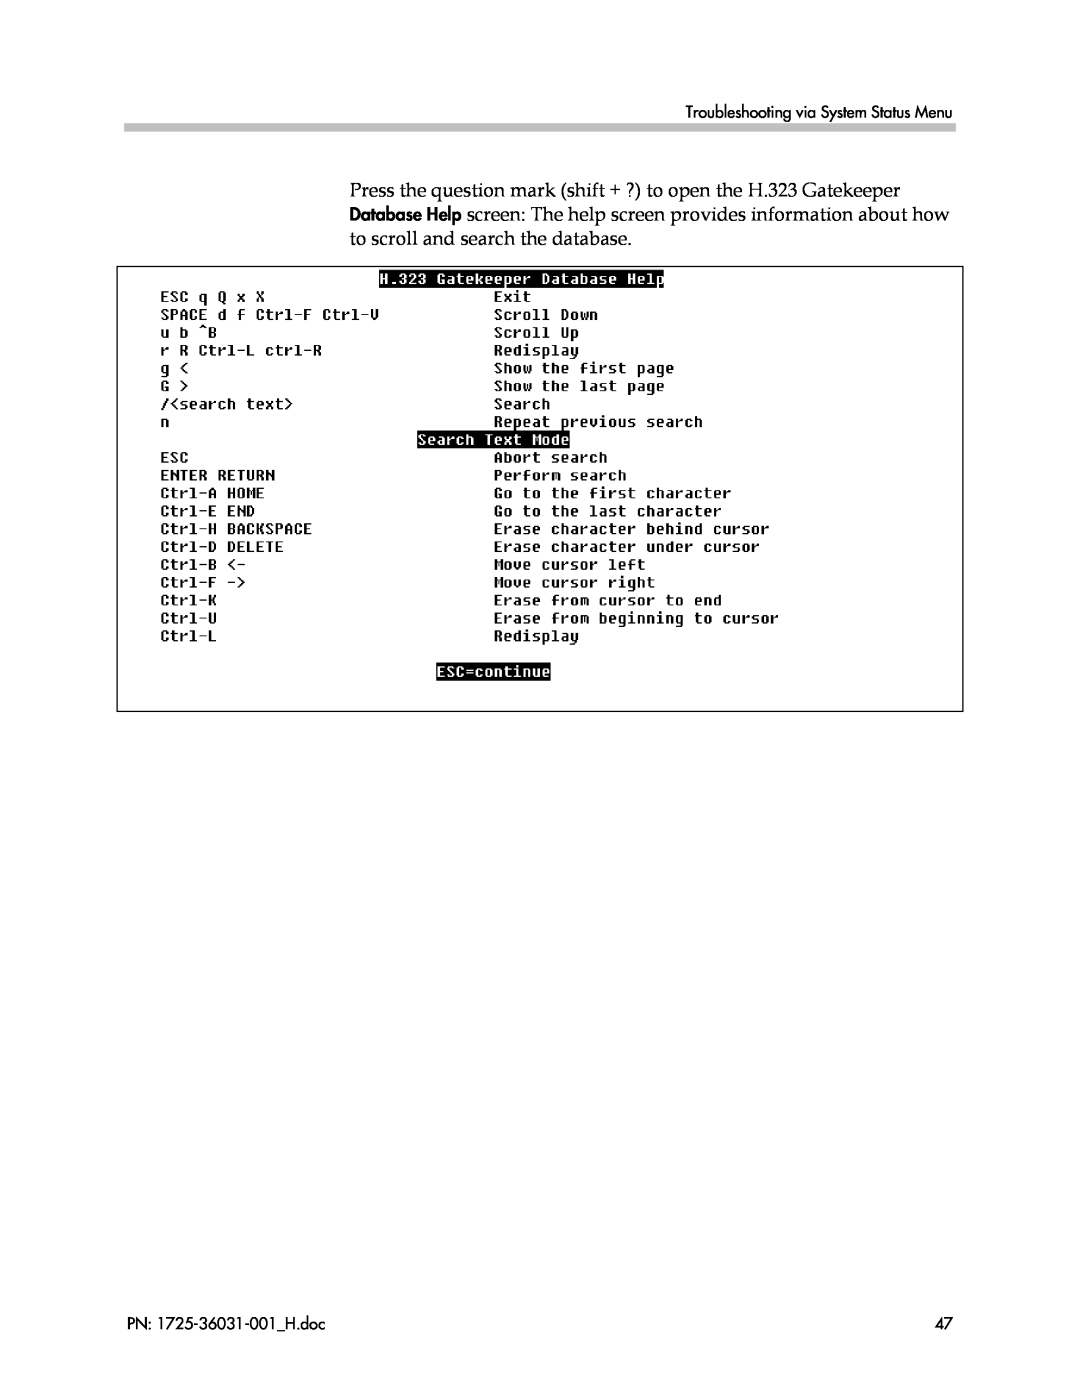 Polycom VP010 manual Troubleshooting via System Status Menu, PN 1725-36031-001H.doc 